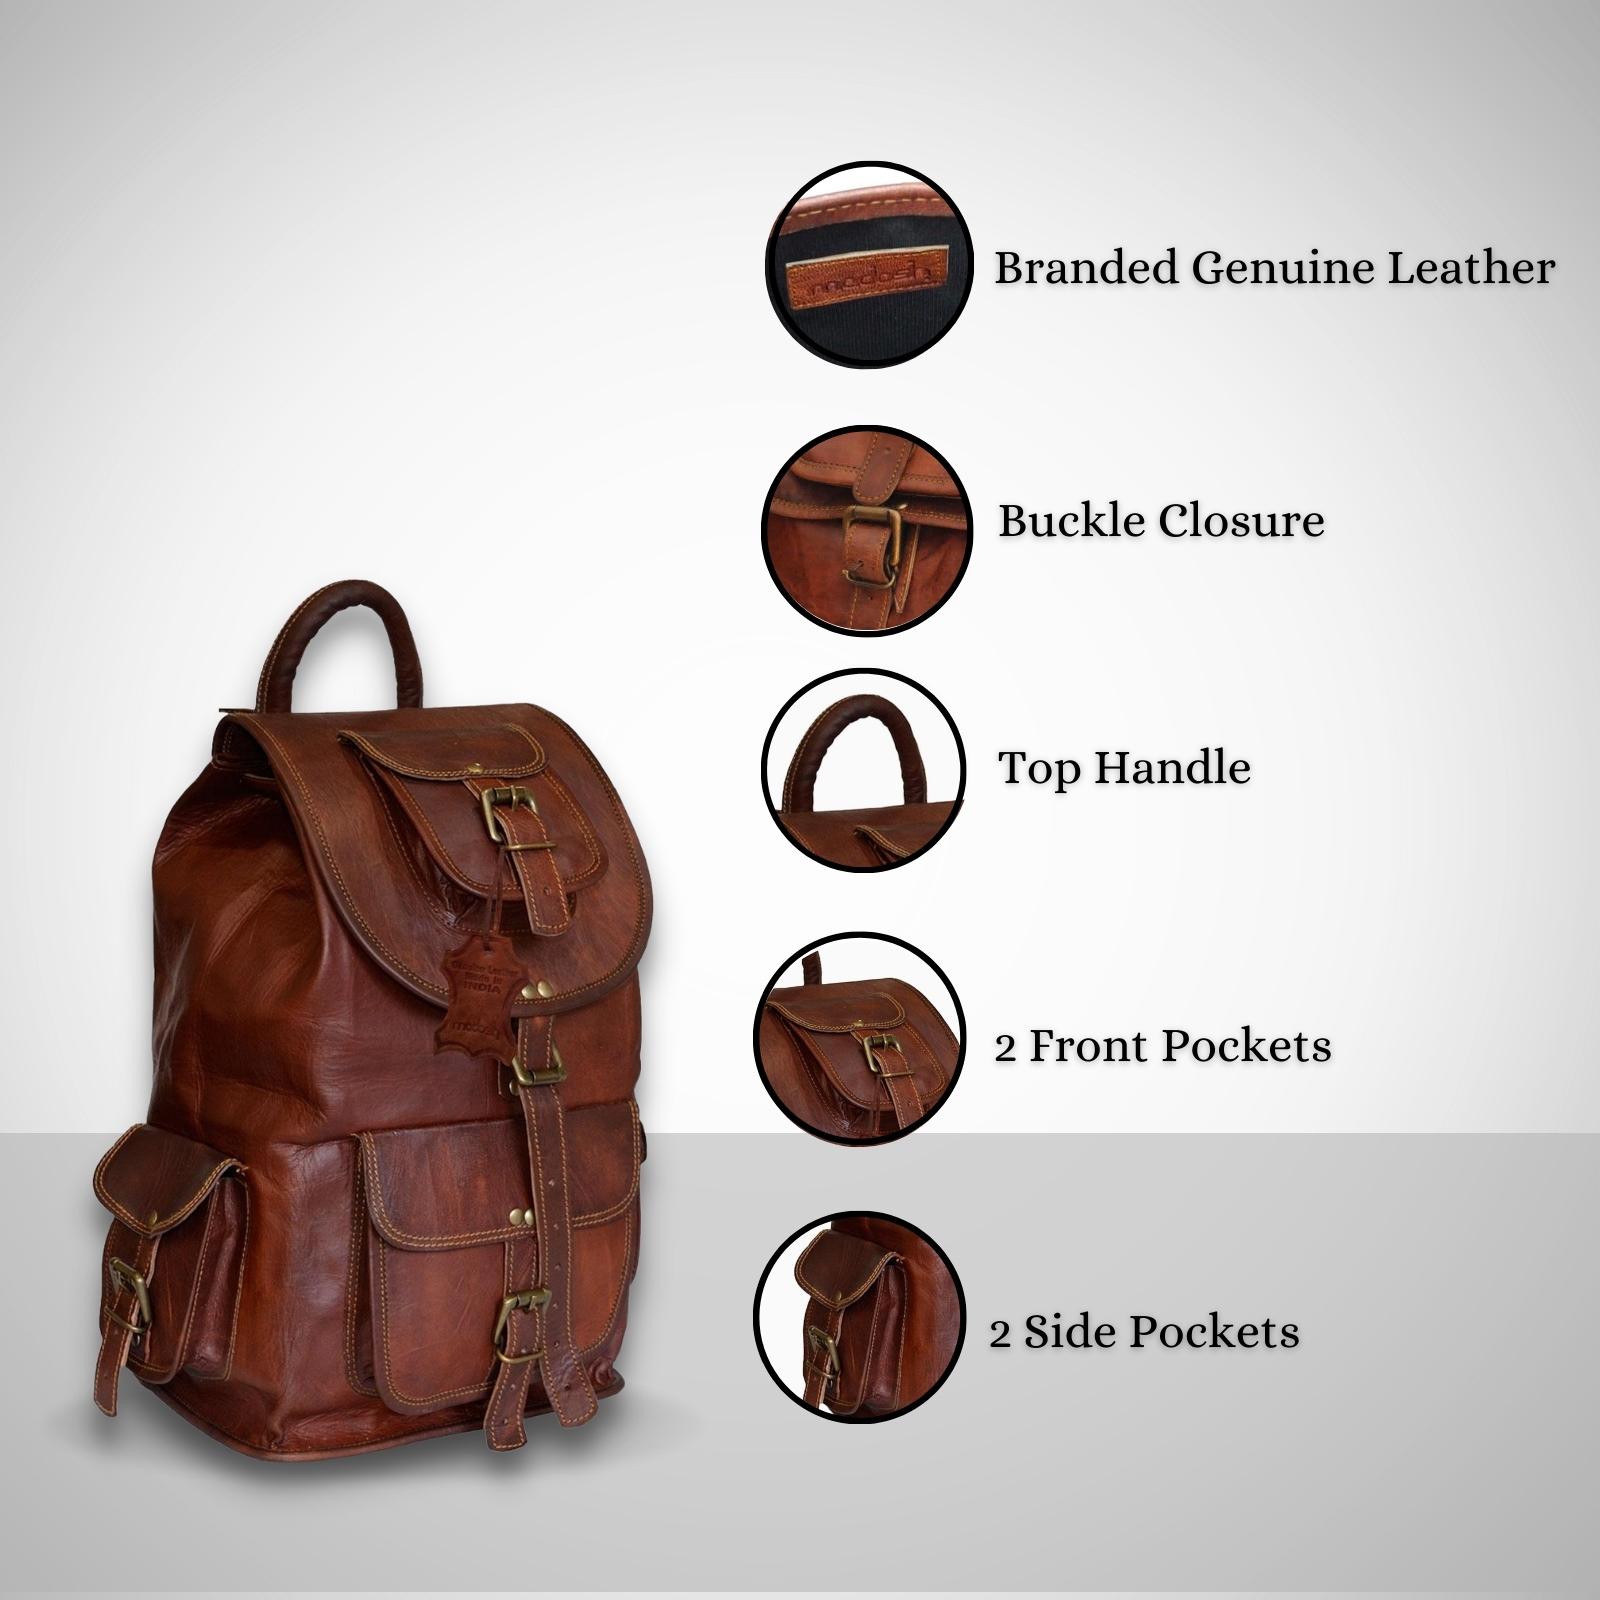 Madosh Genuine Leather Backpacks Hiking Rucksack Brown Camping Daypacks Travel Luggage Bag - image 4 of 6